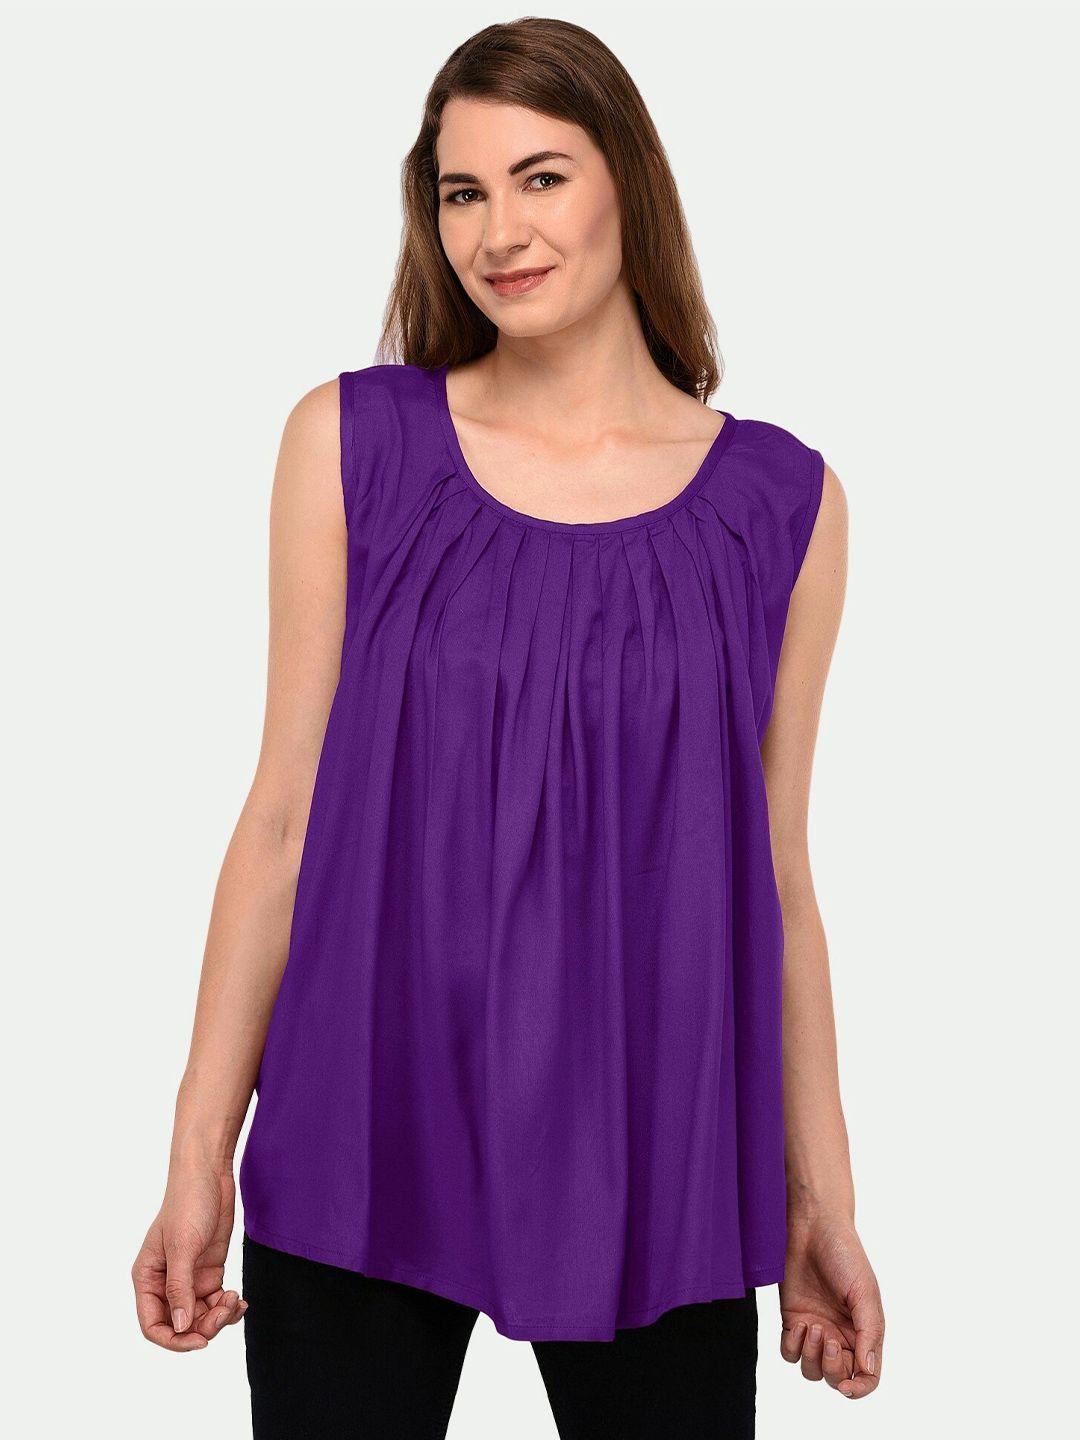 patrorna women purple top